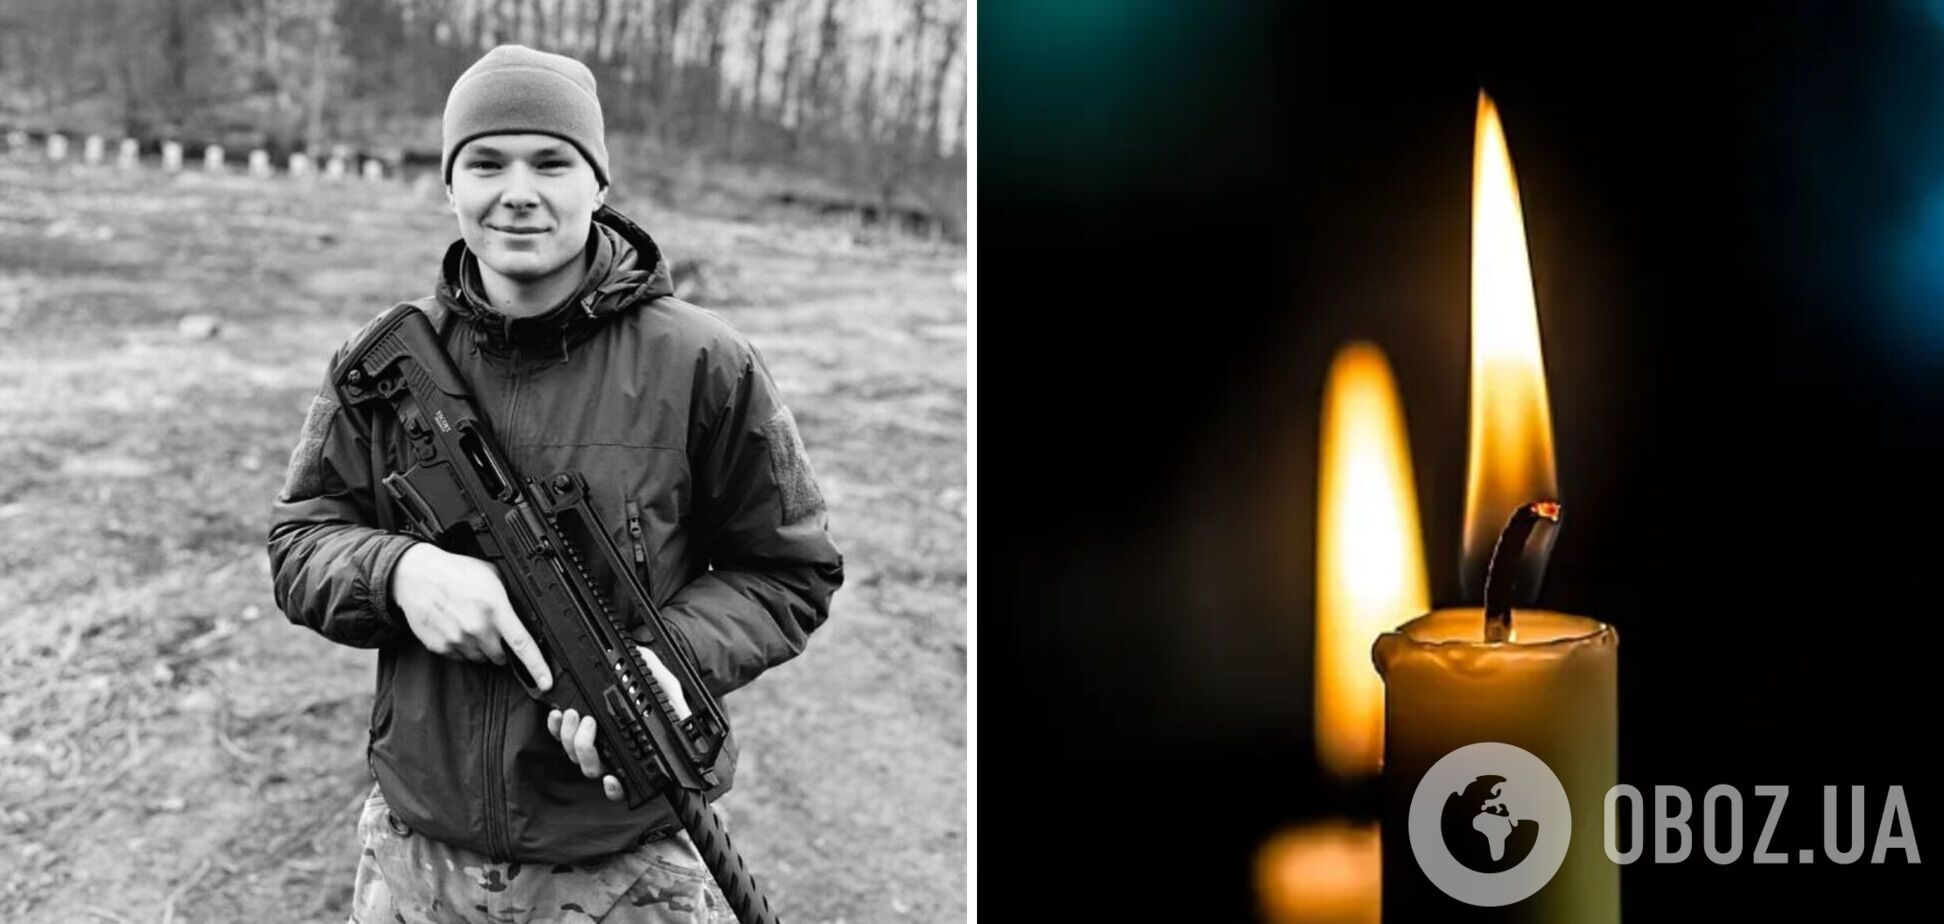 Последний бой принял в районе Орловки: на фронте погиб 19-летний защитник из Одесской области. Фото